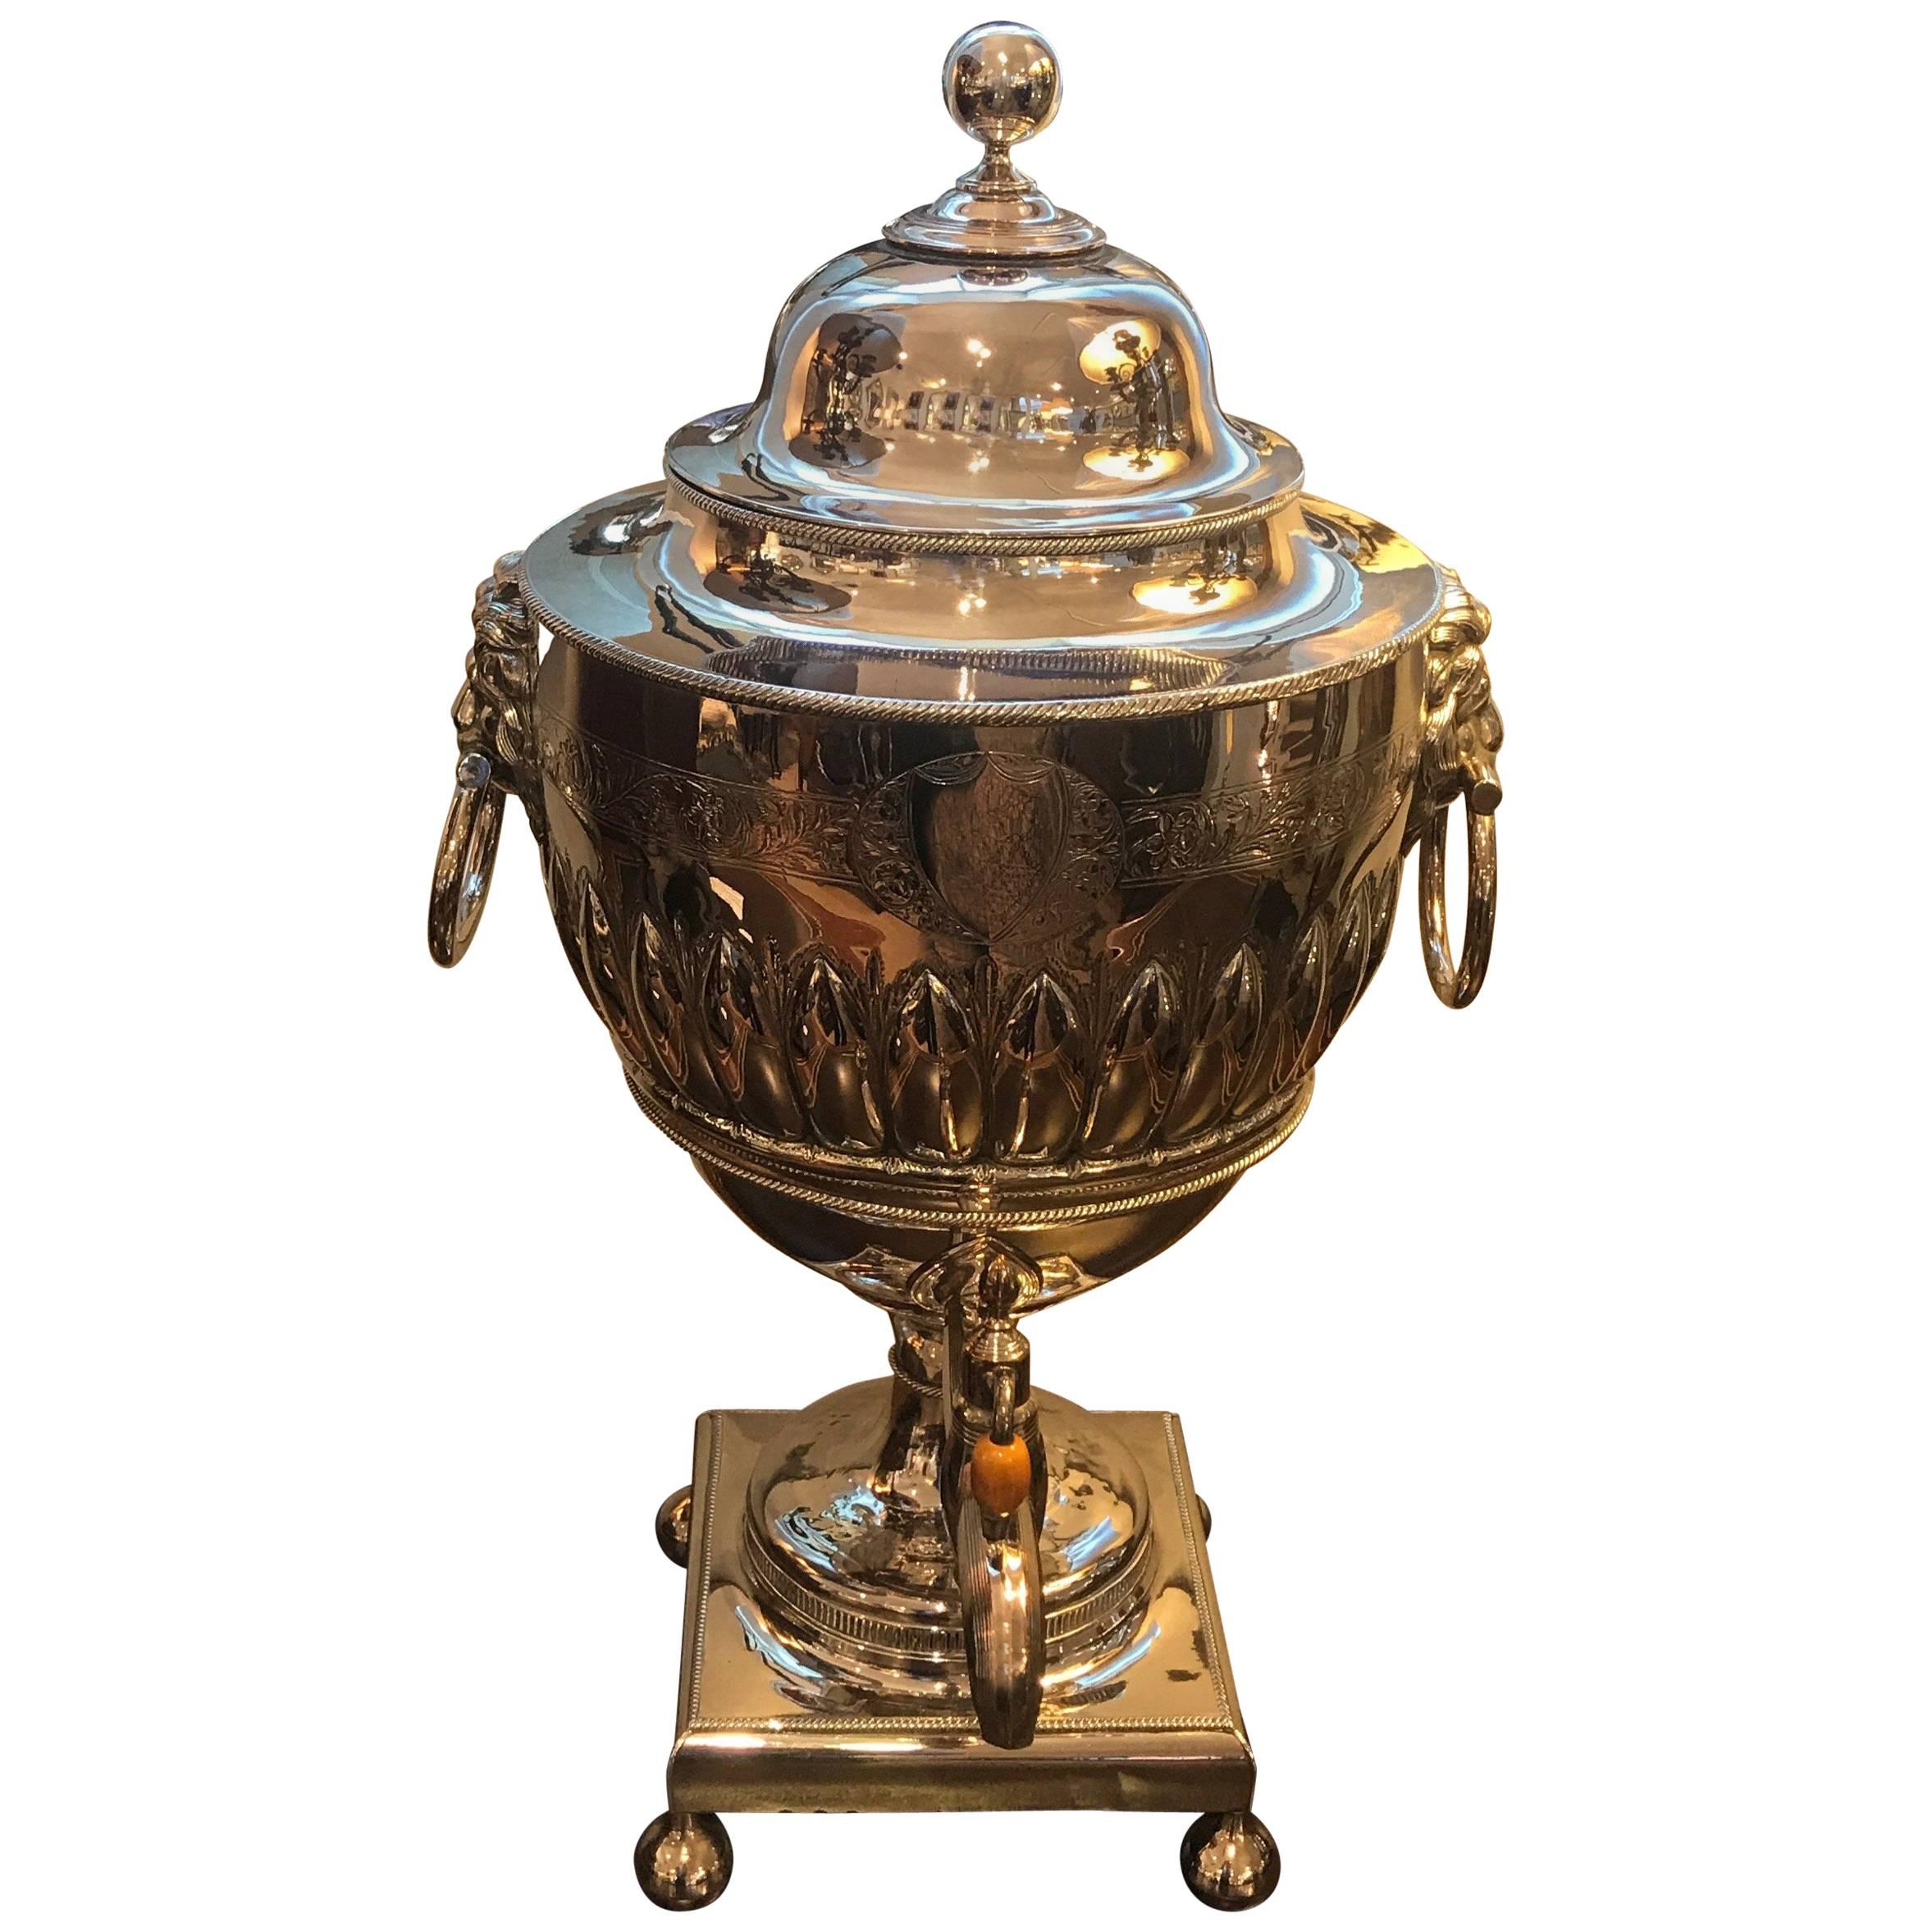 19th Century English Silver Plate Tea Urn